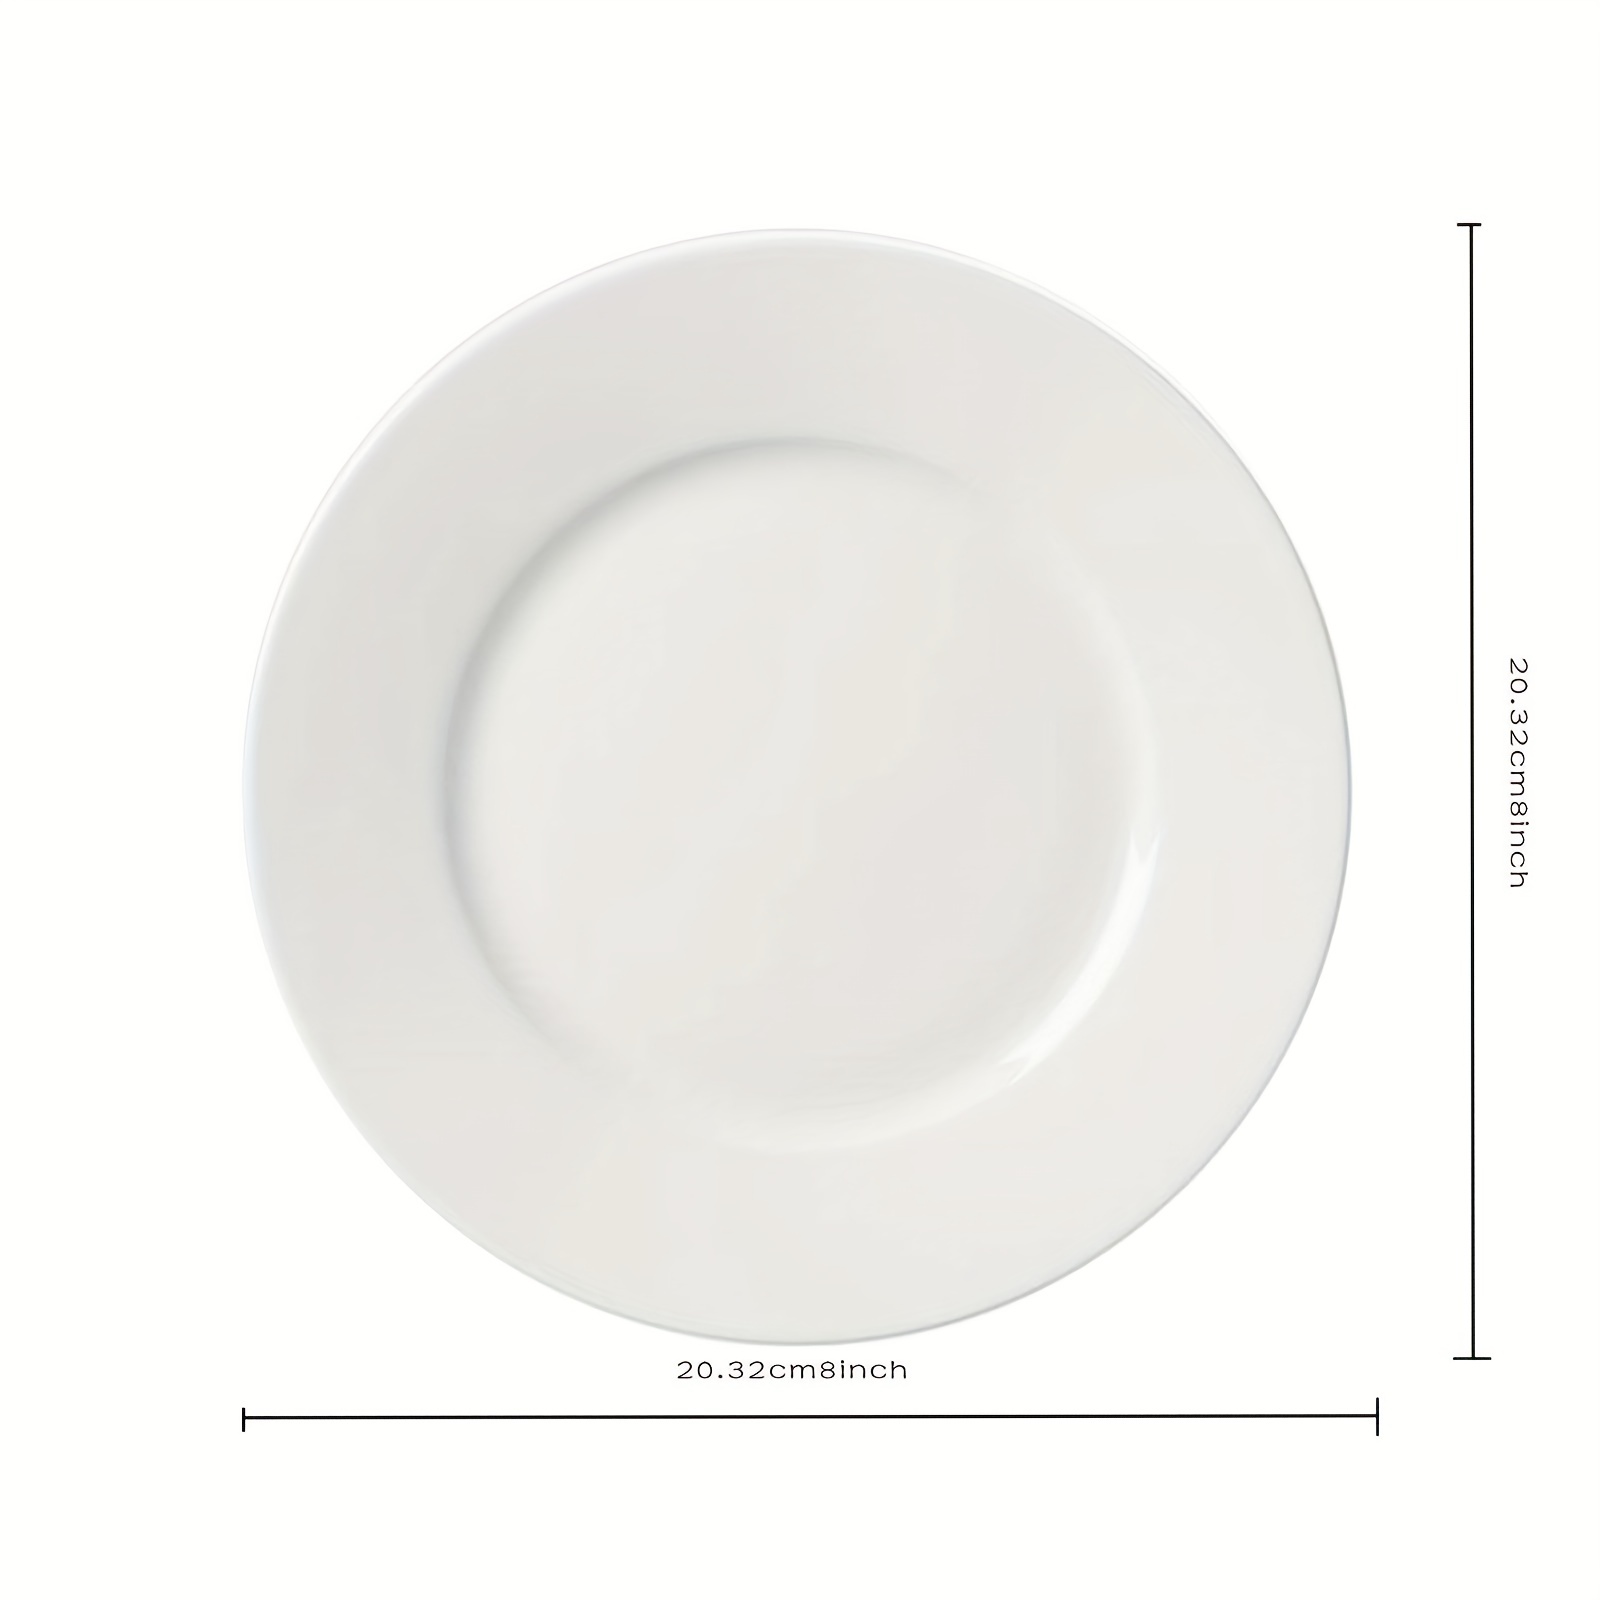 hot product elegant dinnerware royal classic bone china luxury